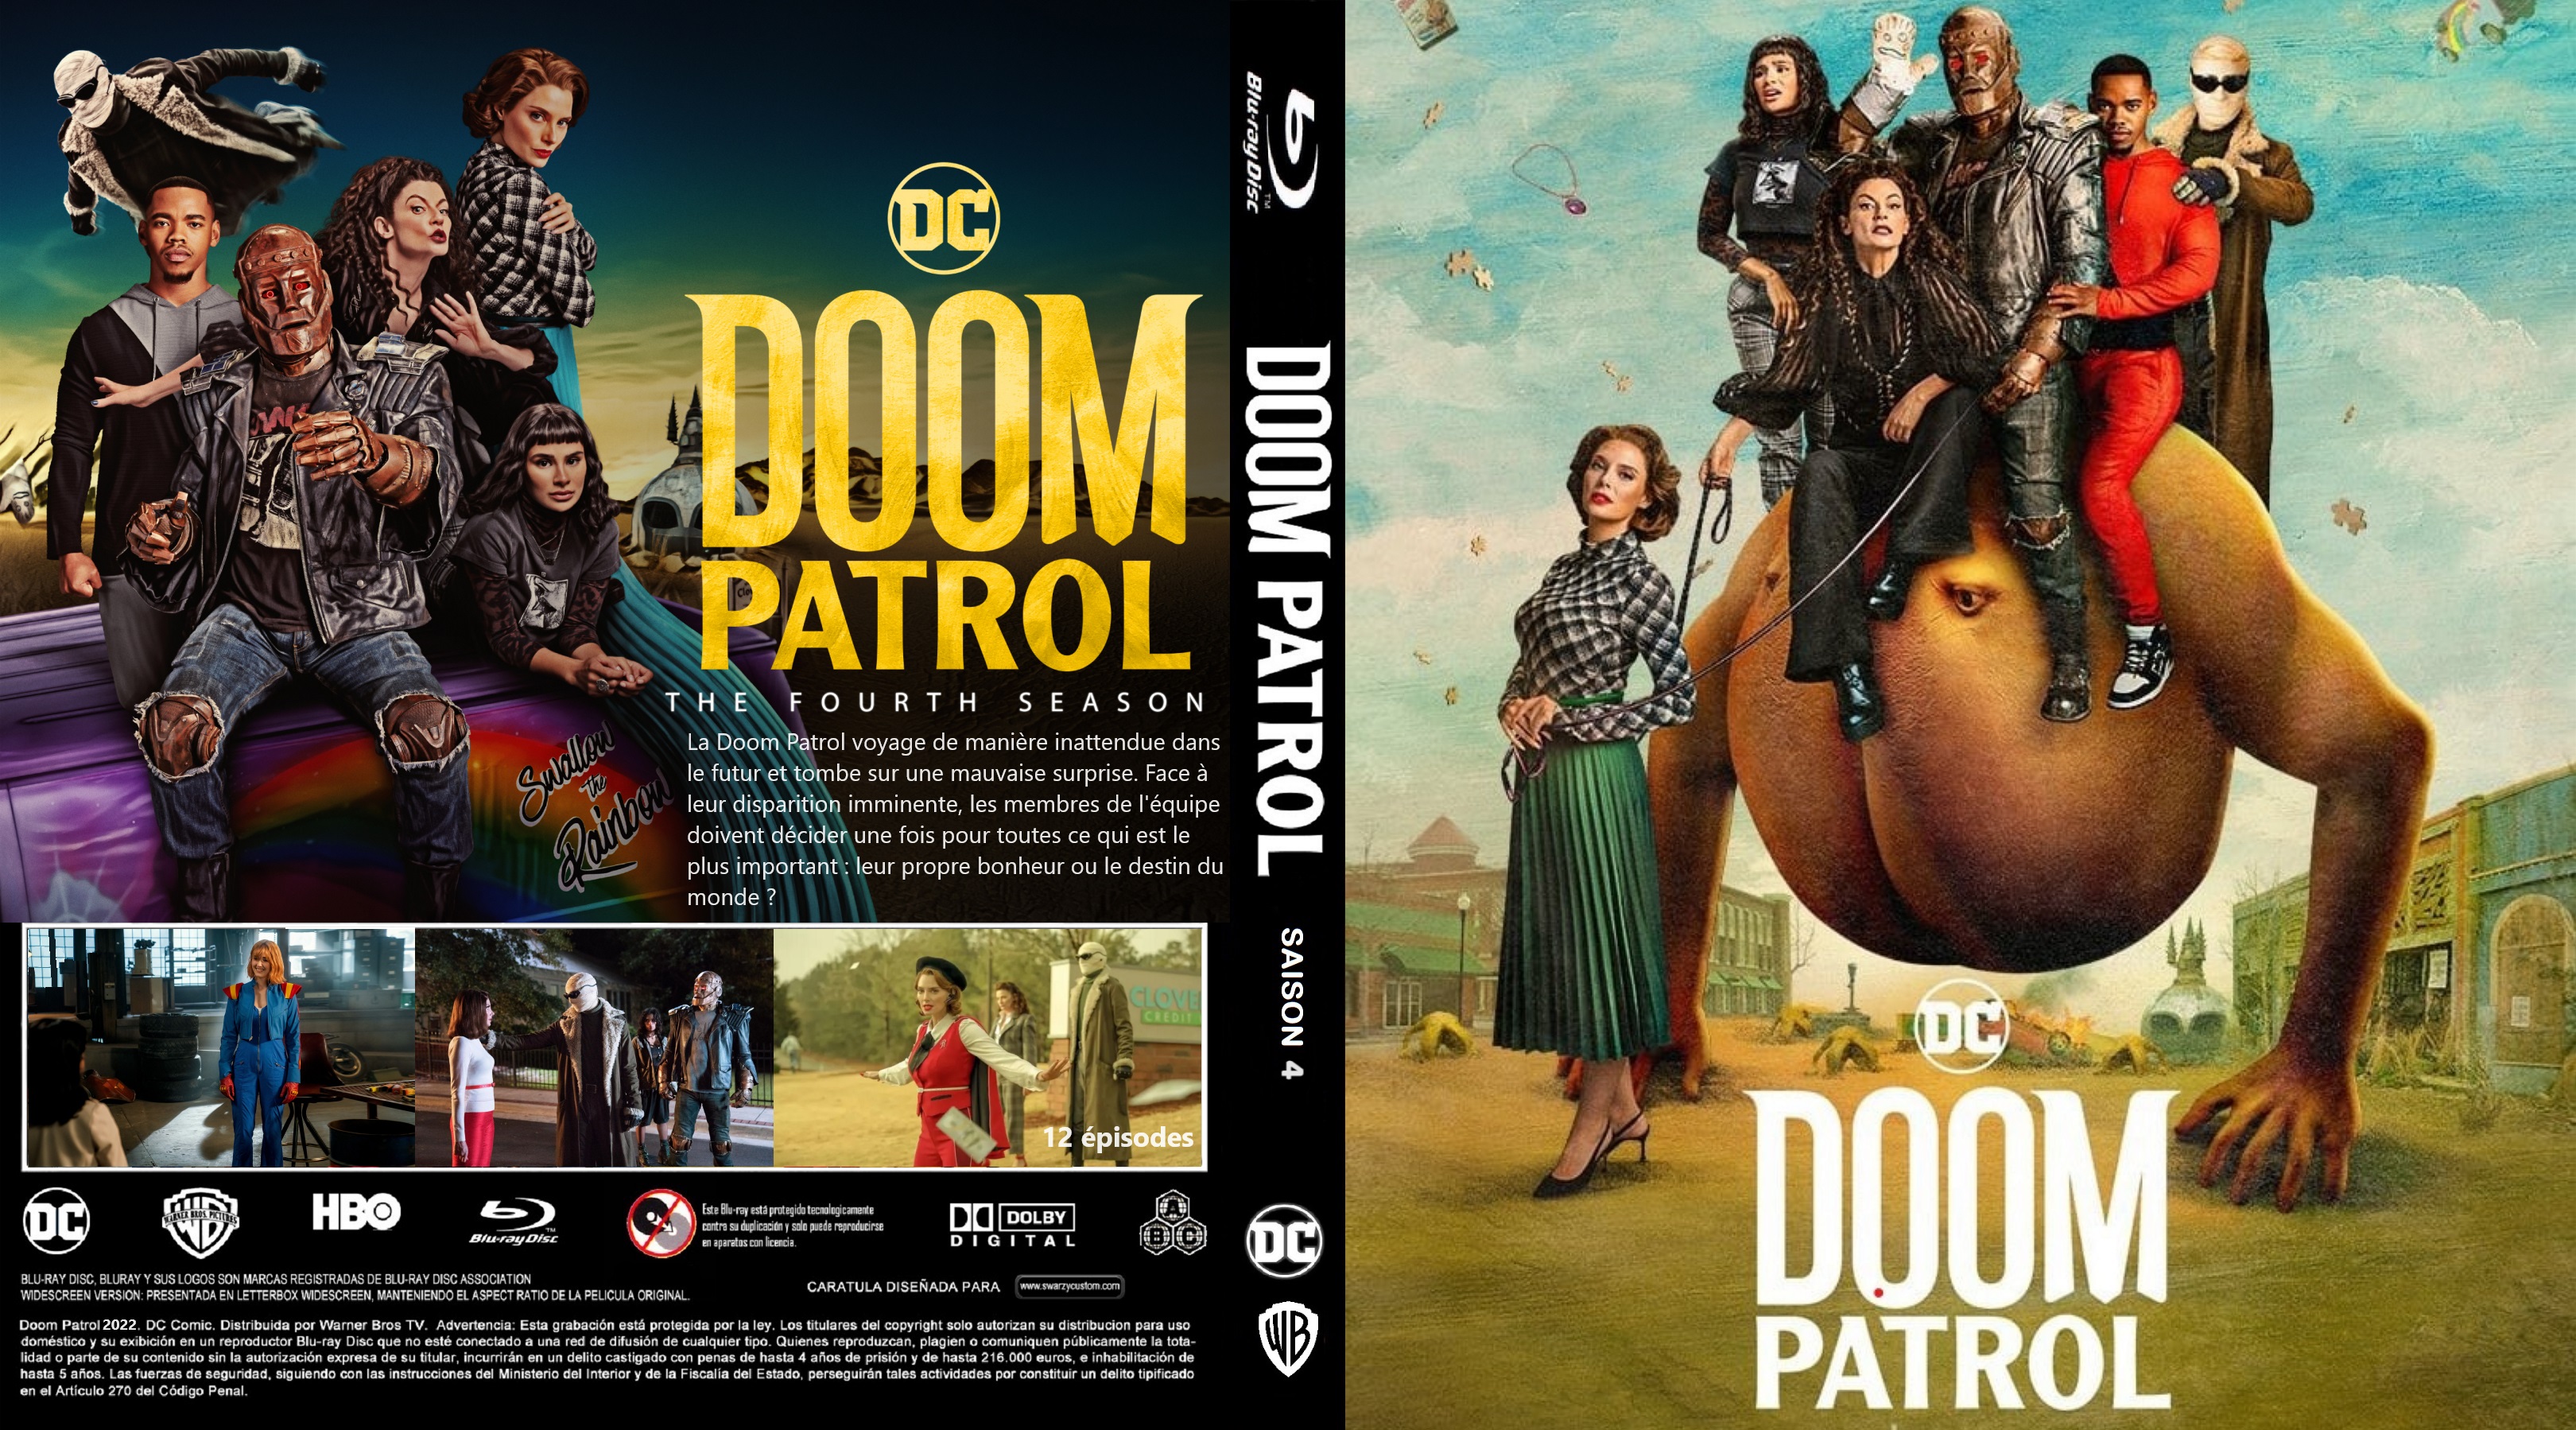 Jaquette DVD Doom Patrol saison 4 custom (BLU-RAY)